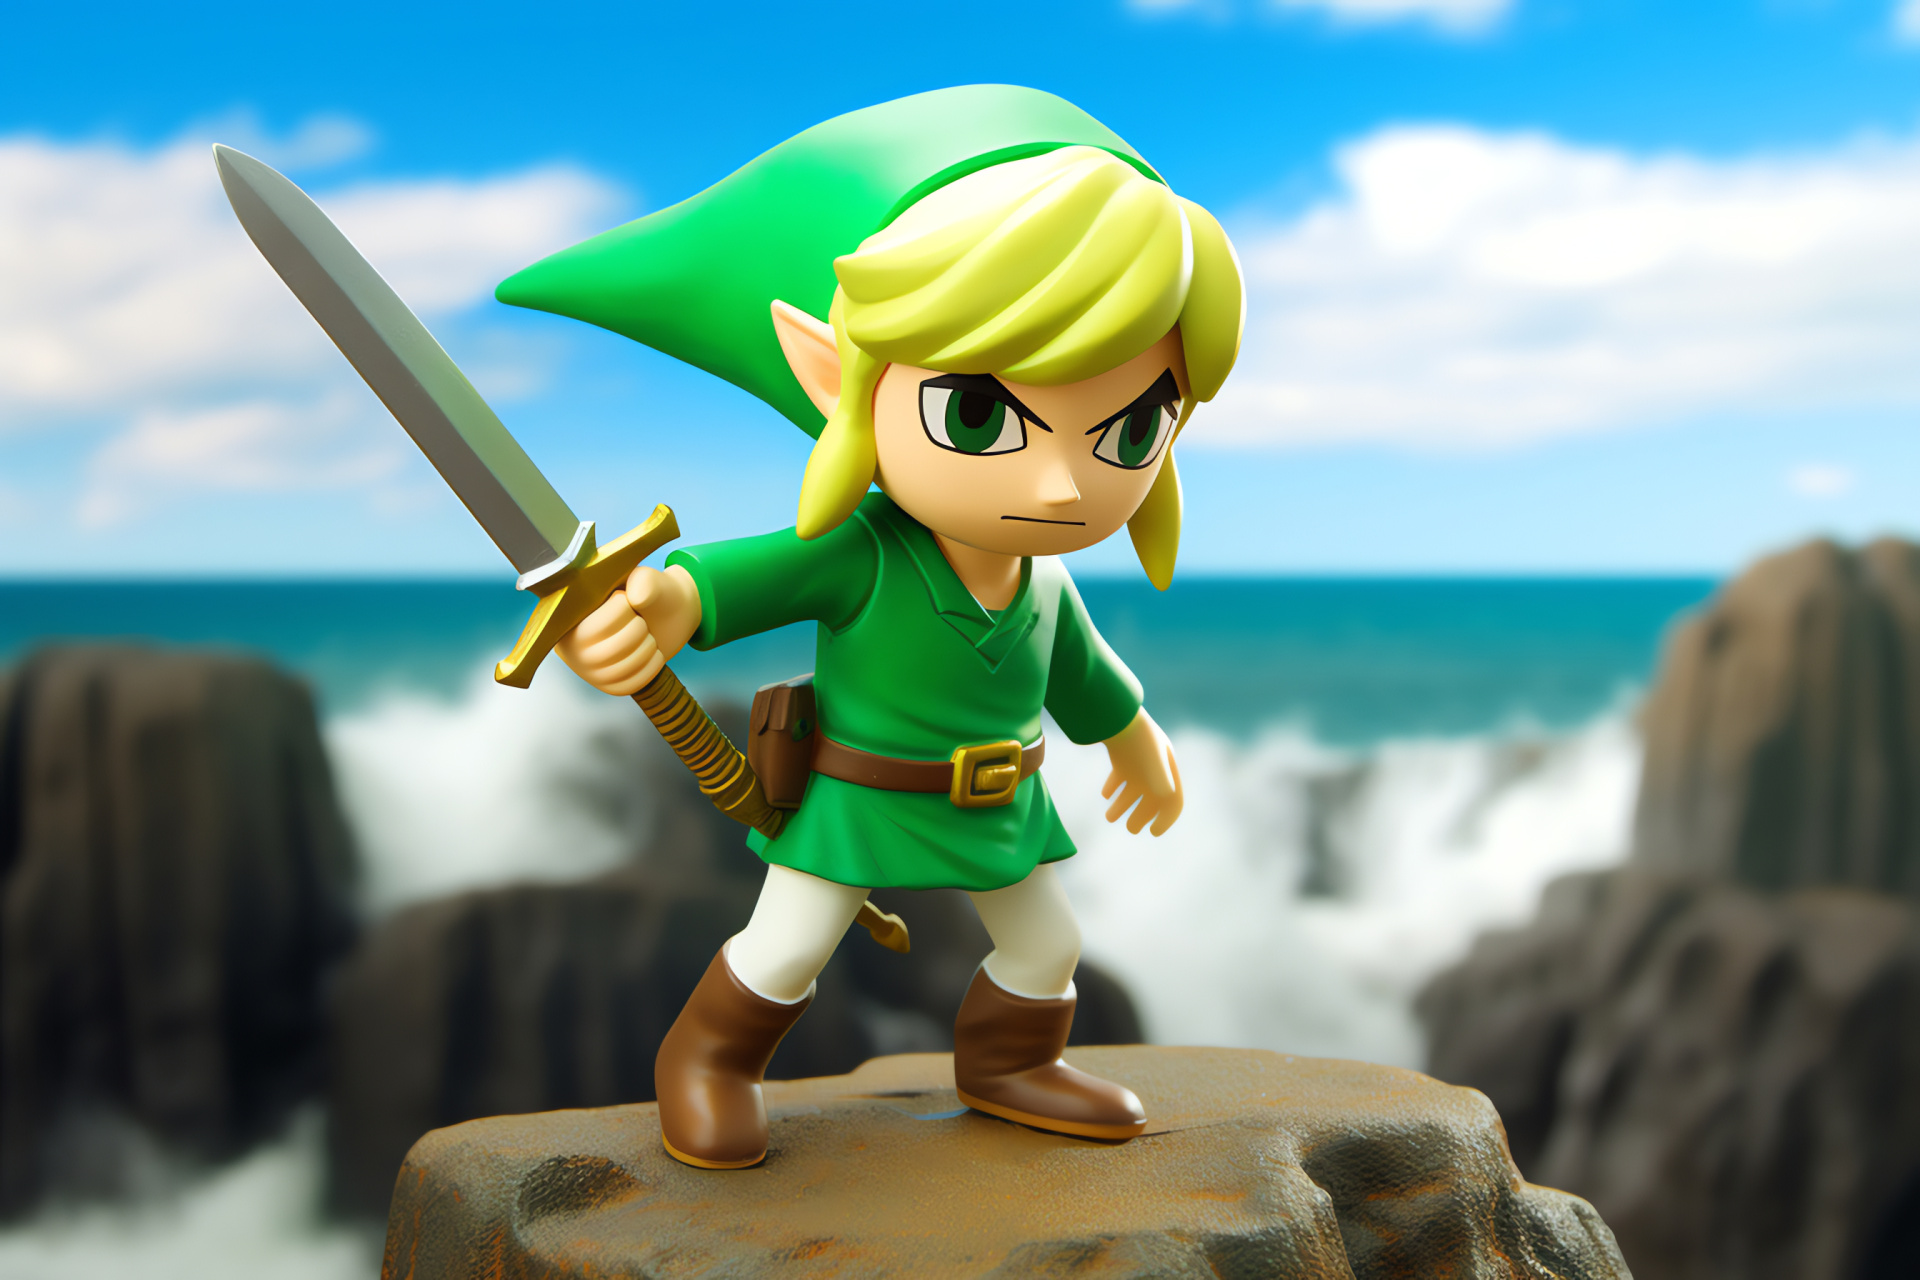 Toon Link, Great Sea island, Animated hero stance, Zelda franchise, Ocean adventure, HD Desktop Image